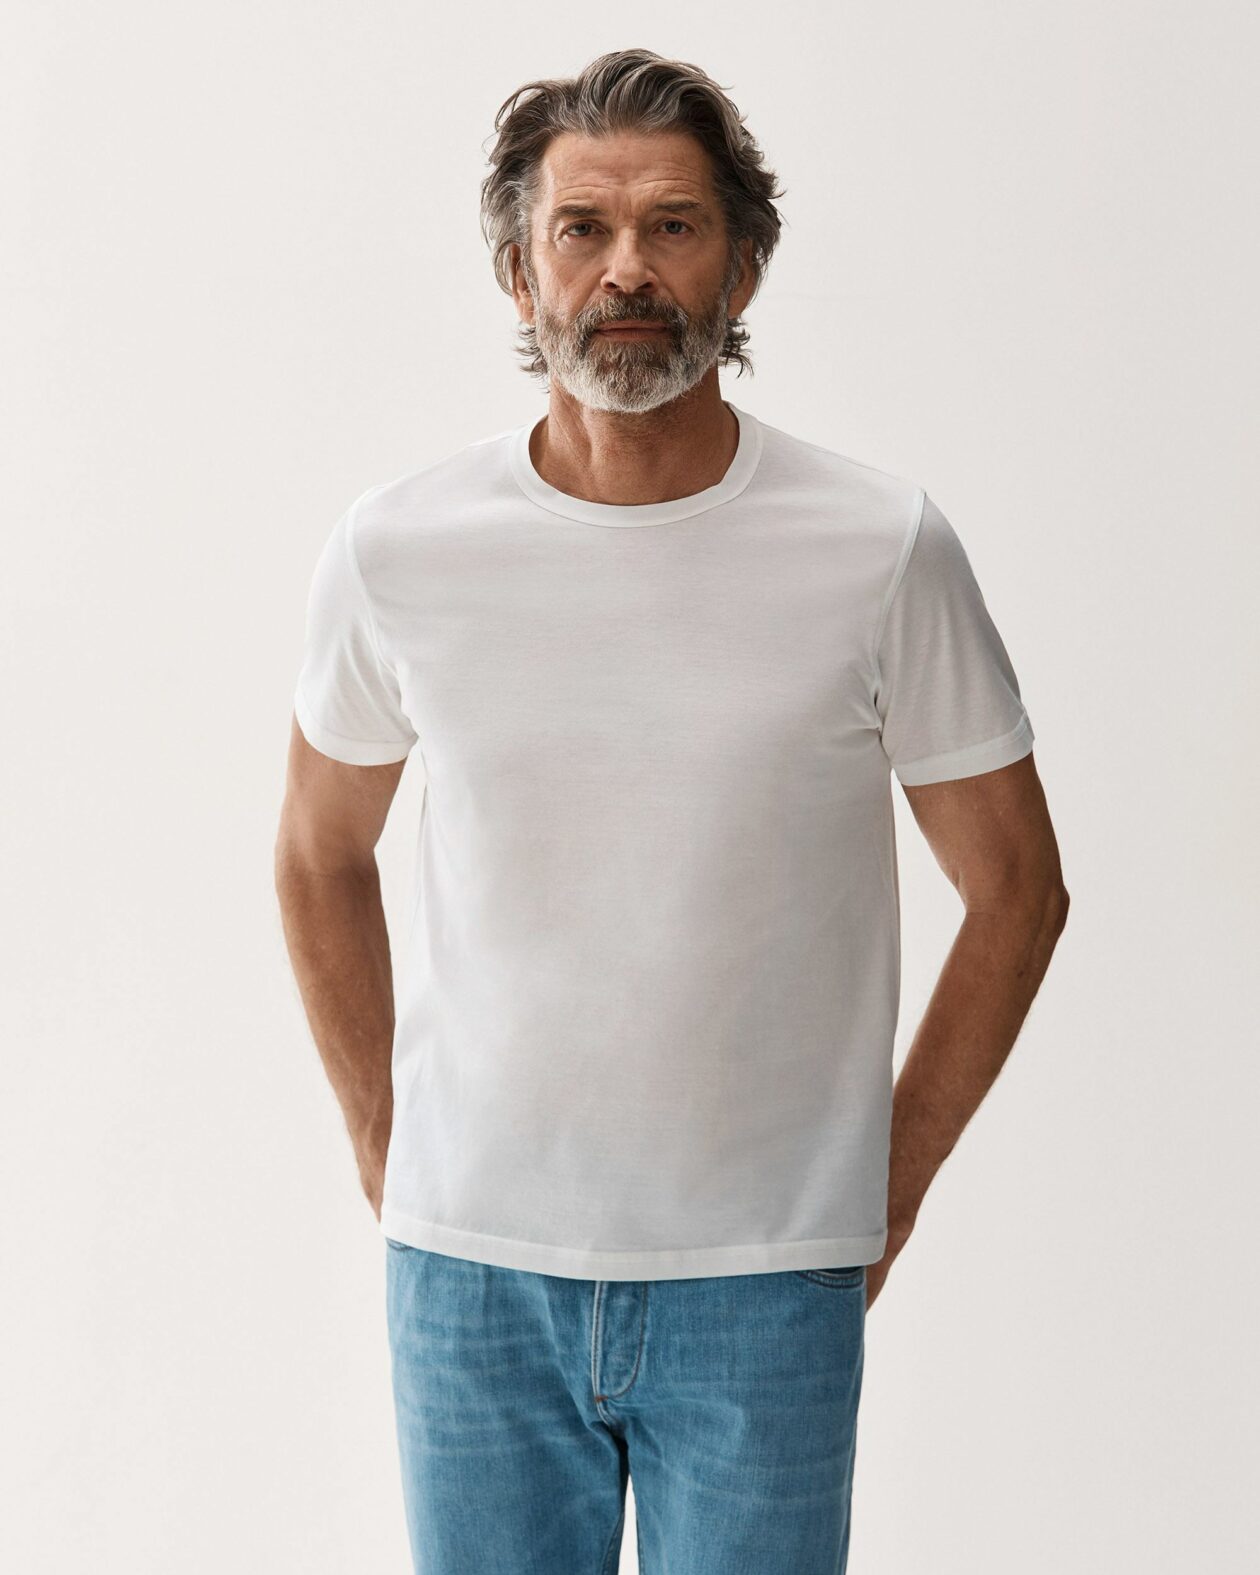 White mercerized cotton T-shirt